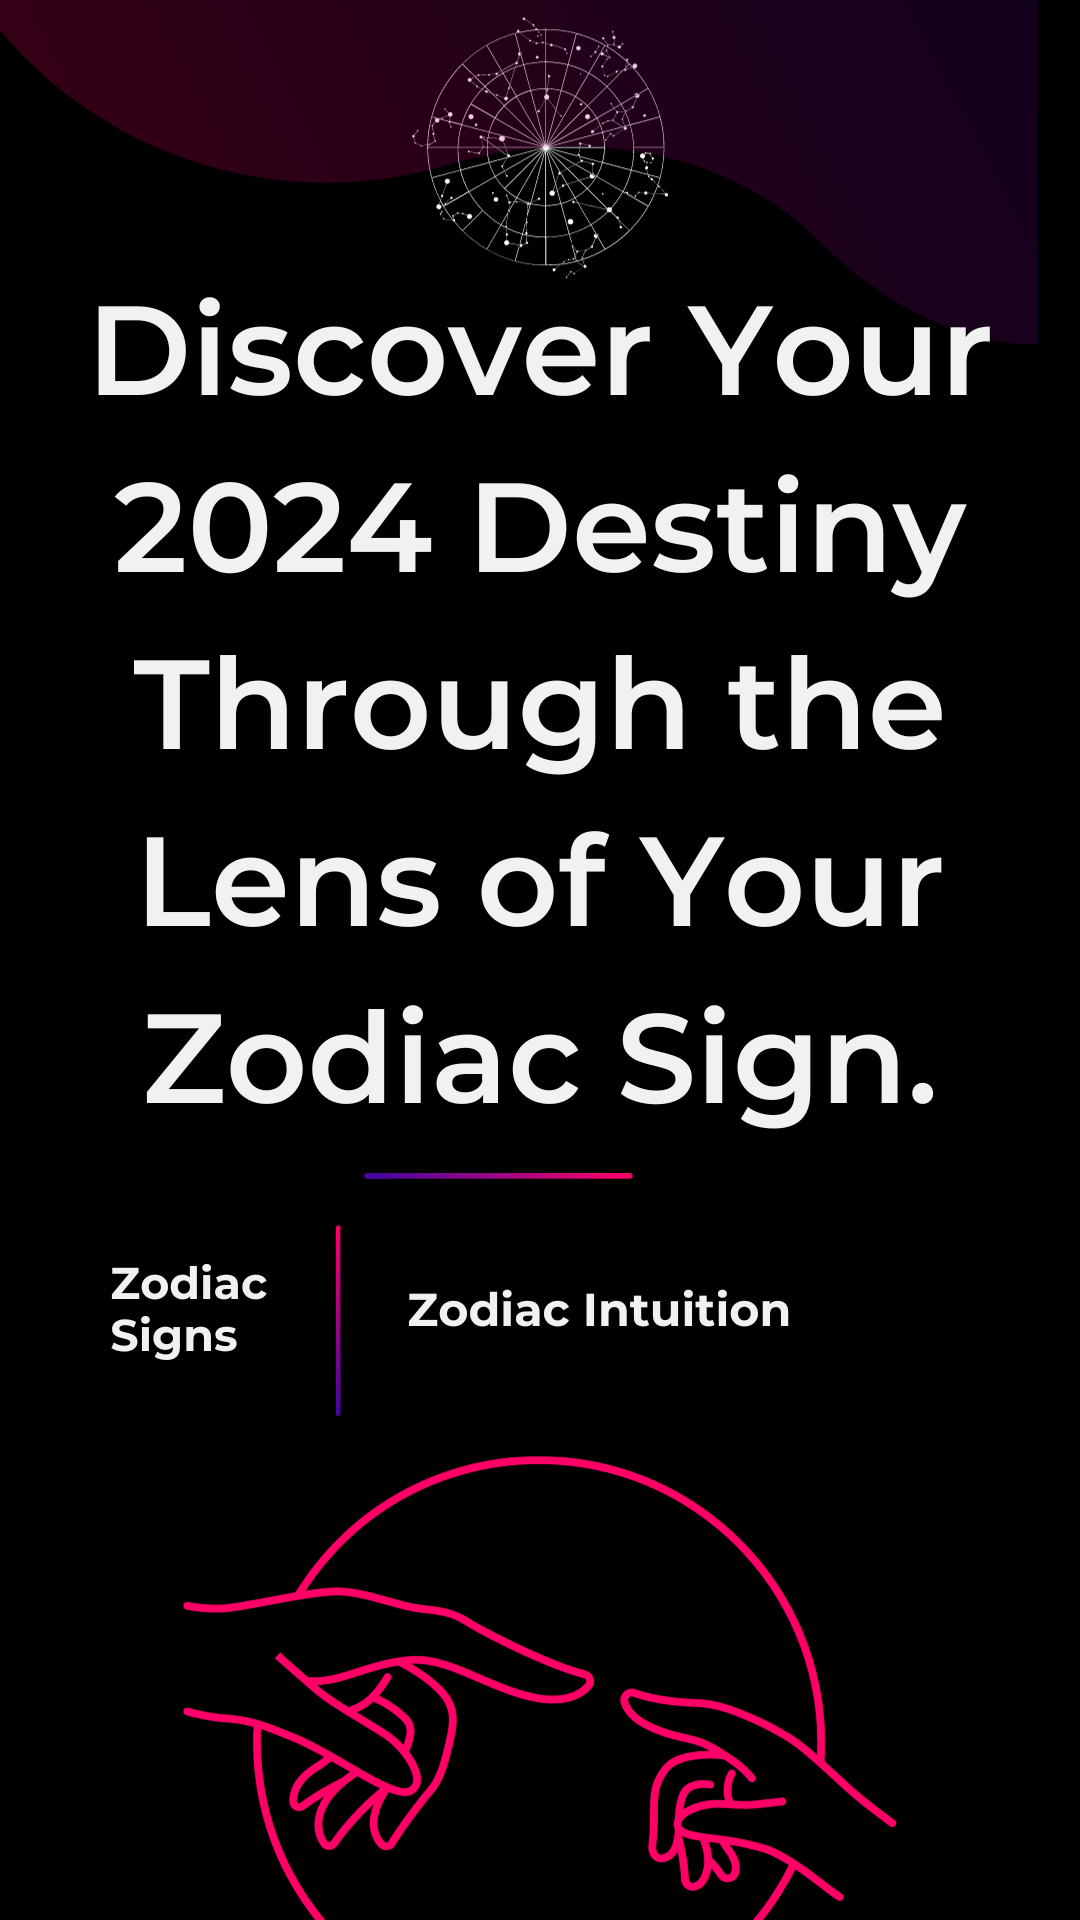 Discover Your 2024 Destiny Through the Lens of Your Zodiac Sign.